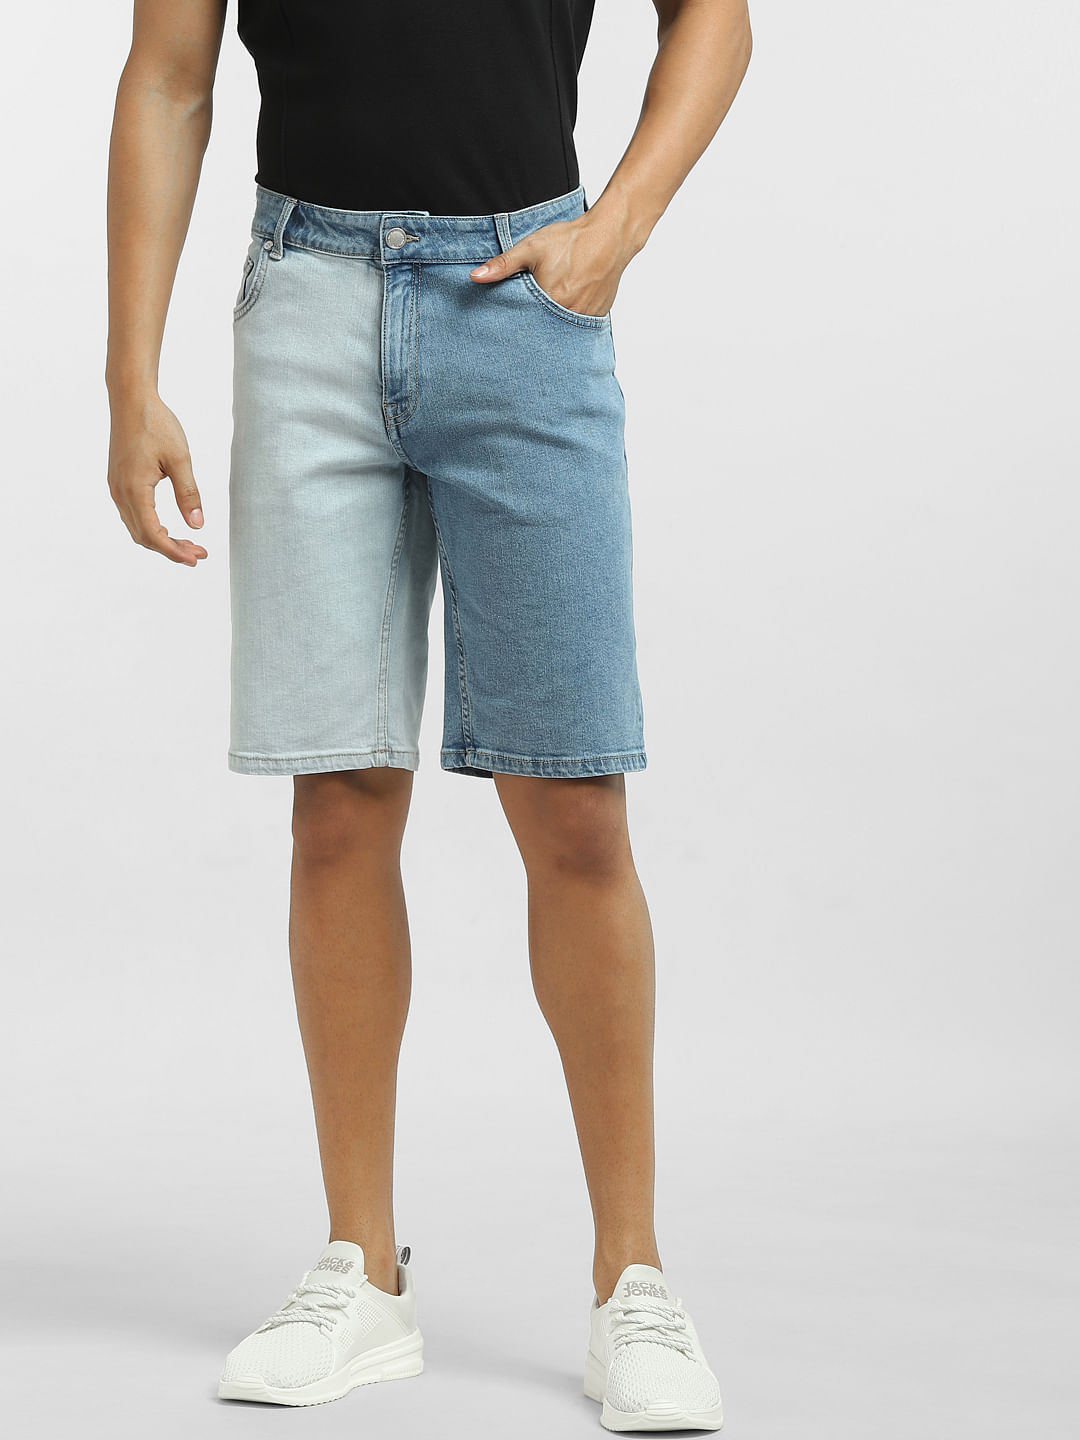 Mcikkny Vintage Men's Cargo Summer Denim Shorts Multi Pockets Blue Straight  Short Jeans For Male Plus